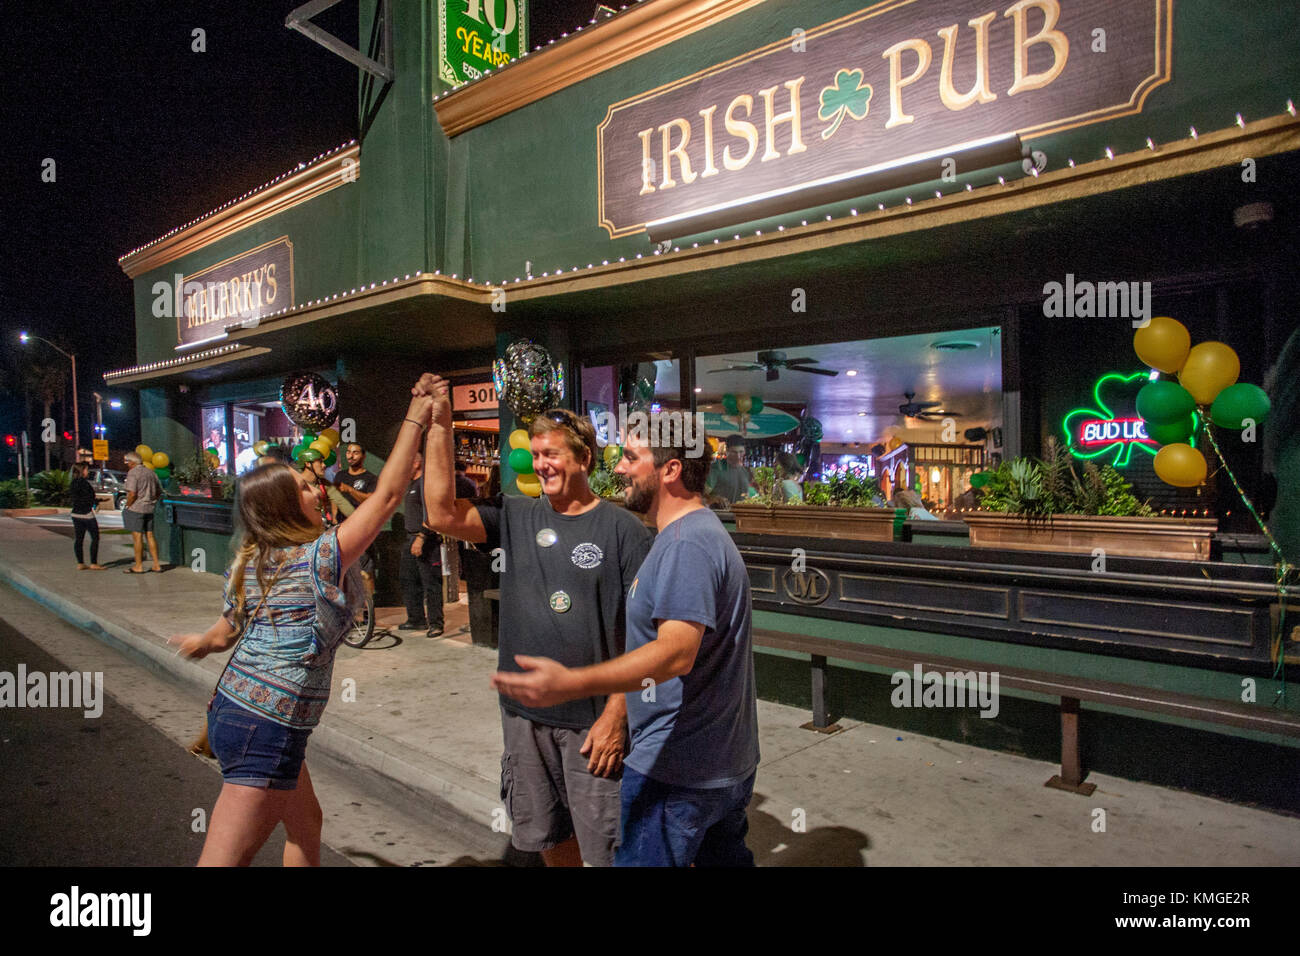 Am exuberant young woman high fives a man outside an Irish bar in Newport Beach, CA. Stock Photo